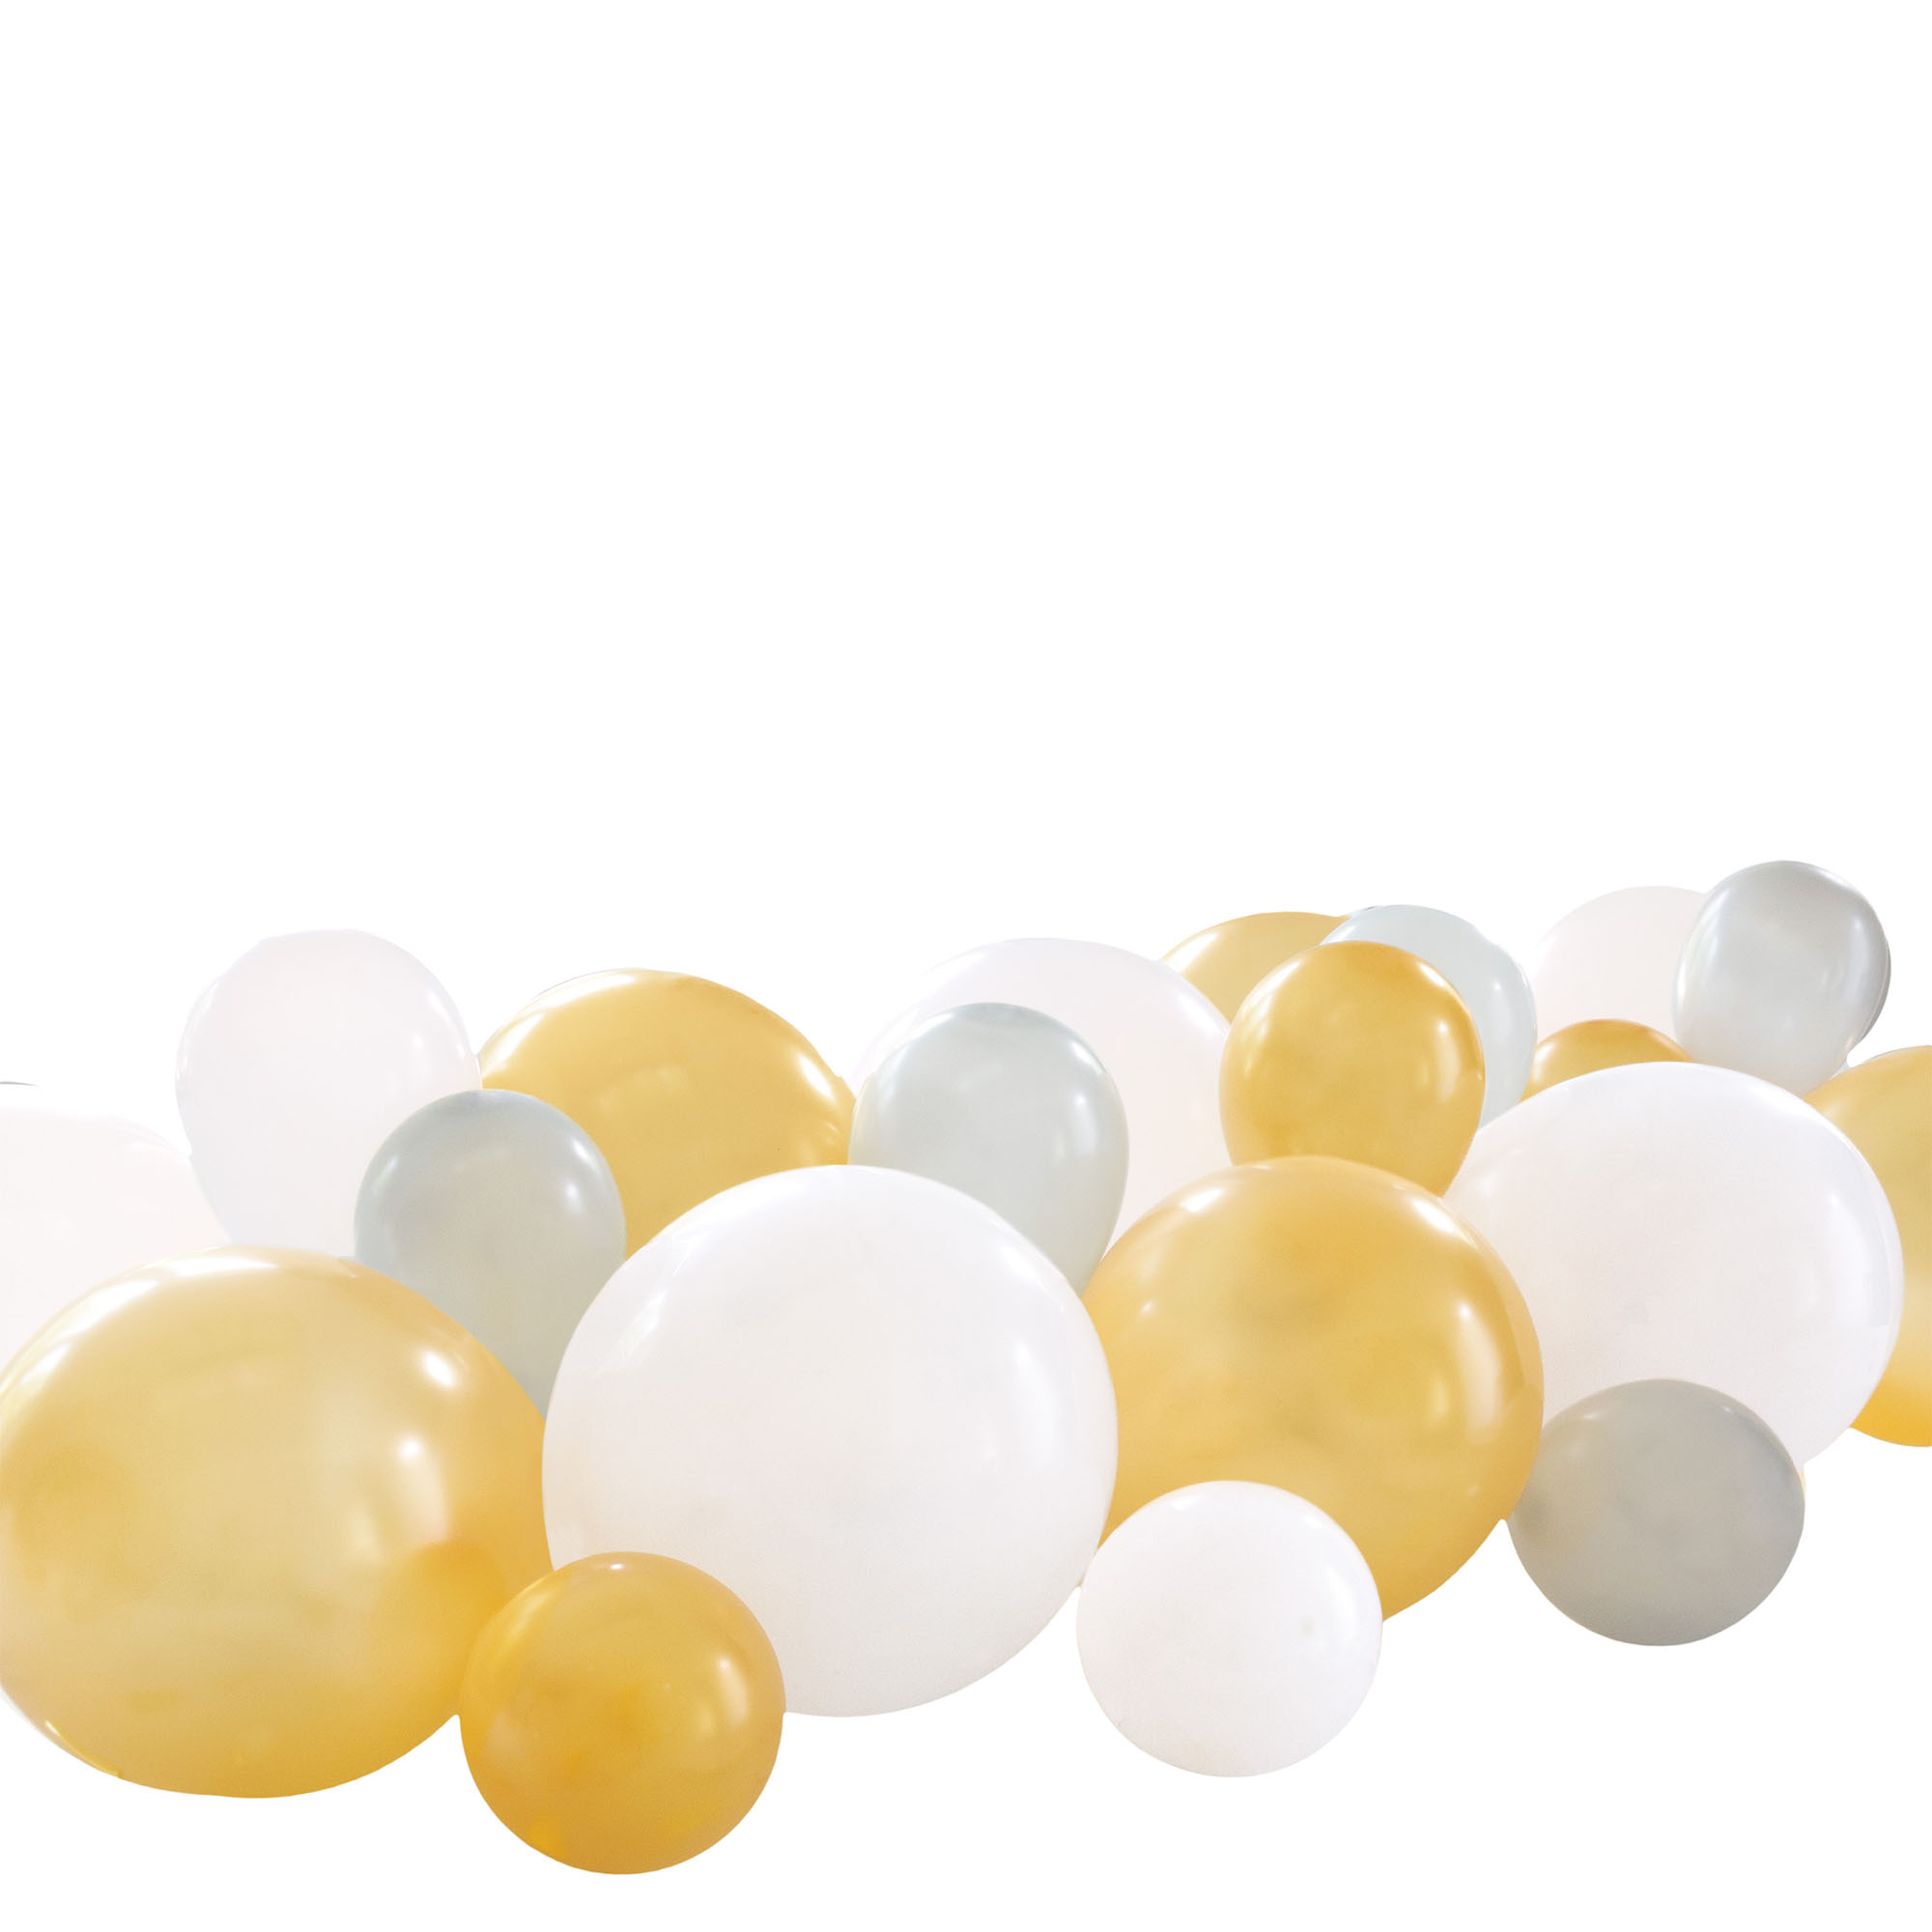 Silver, White & Gold Balloon Garland Table Runner Kit